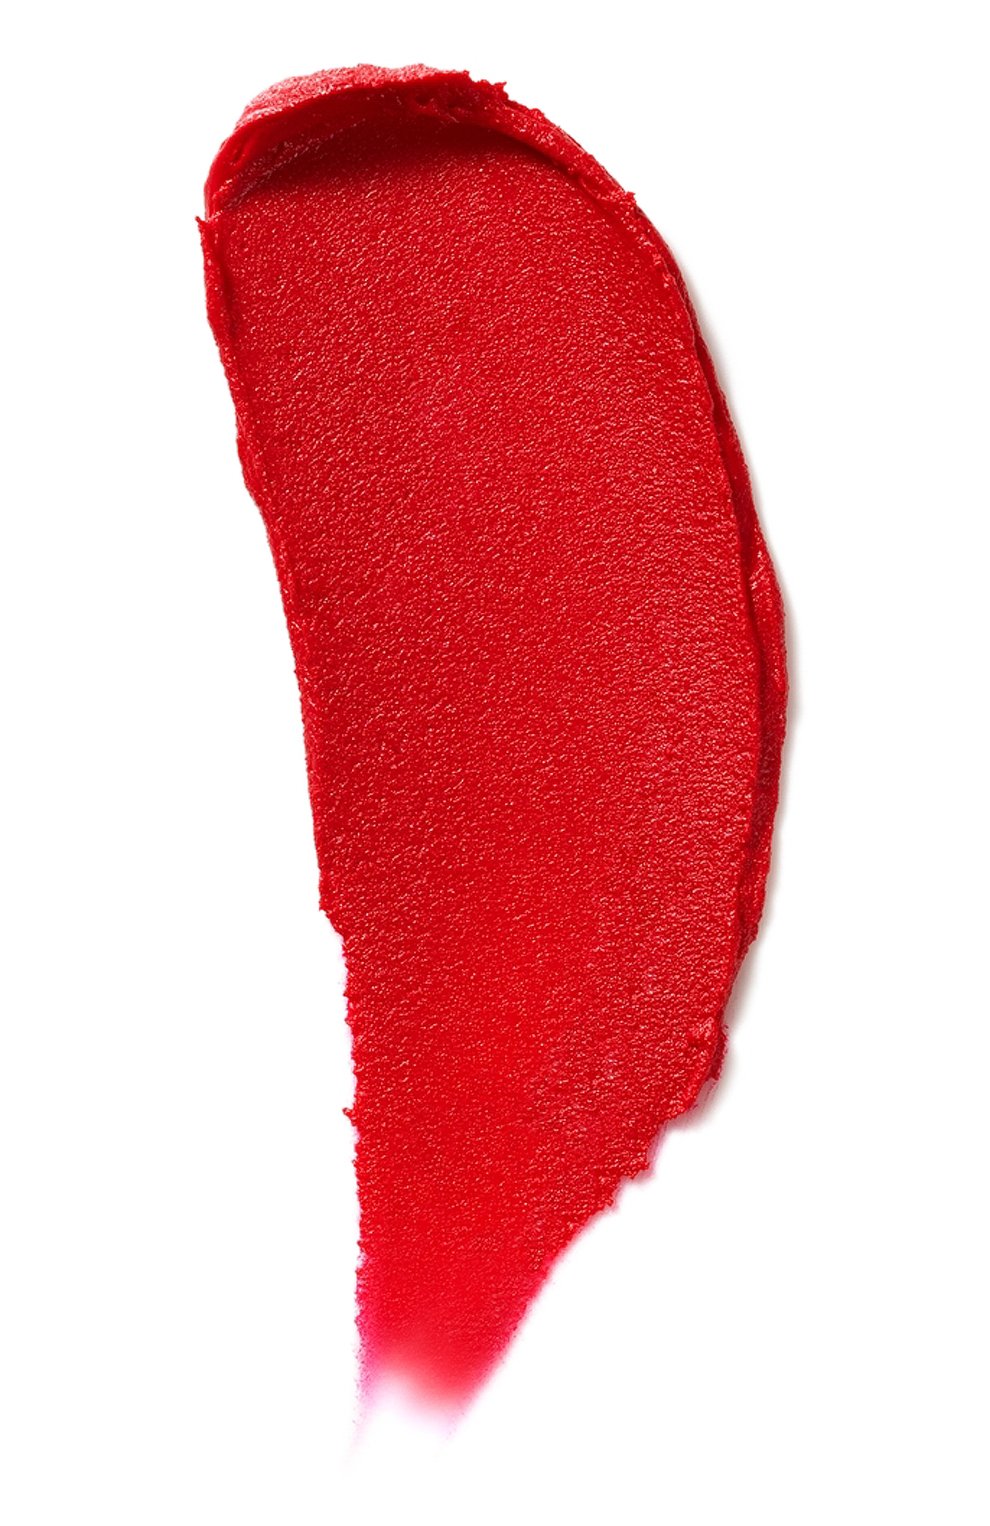 Помада rouge unlimited matte, rd163 SHU UEMURA  цвета, арт. 4935421717250 | Фото 2 (Финишное покрытие: Матовый)